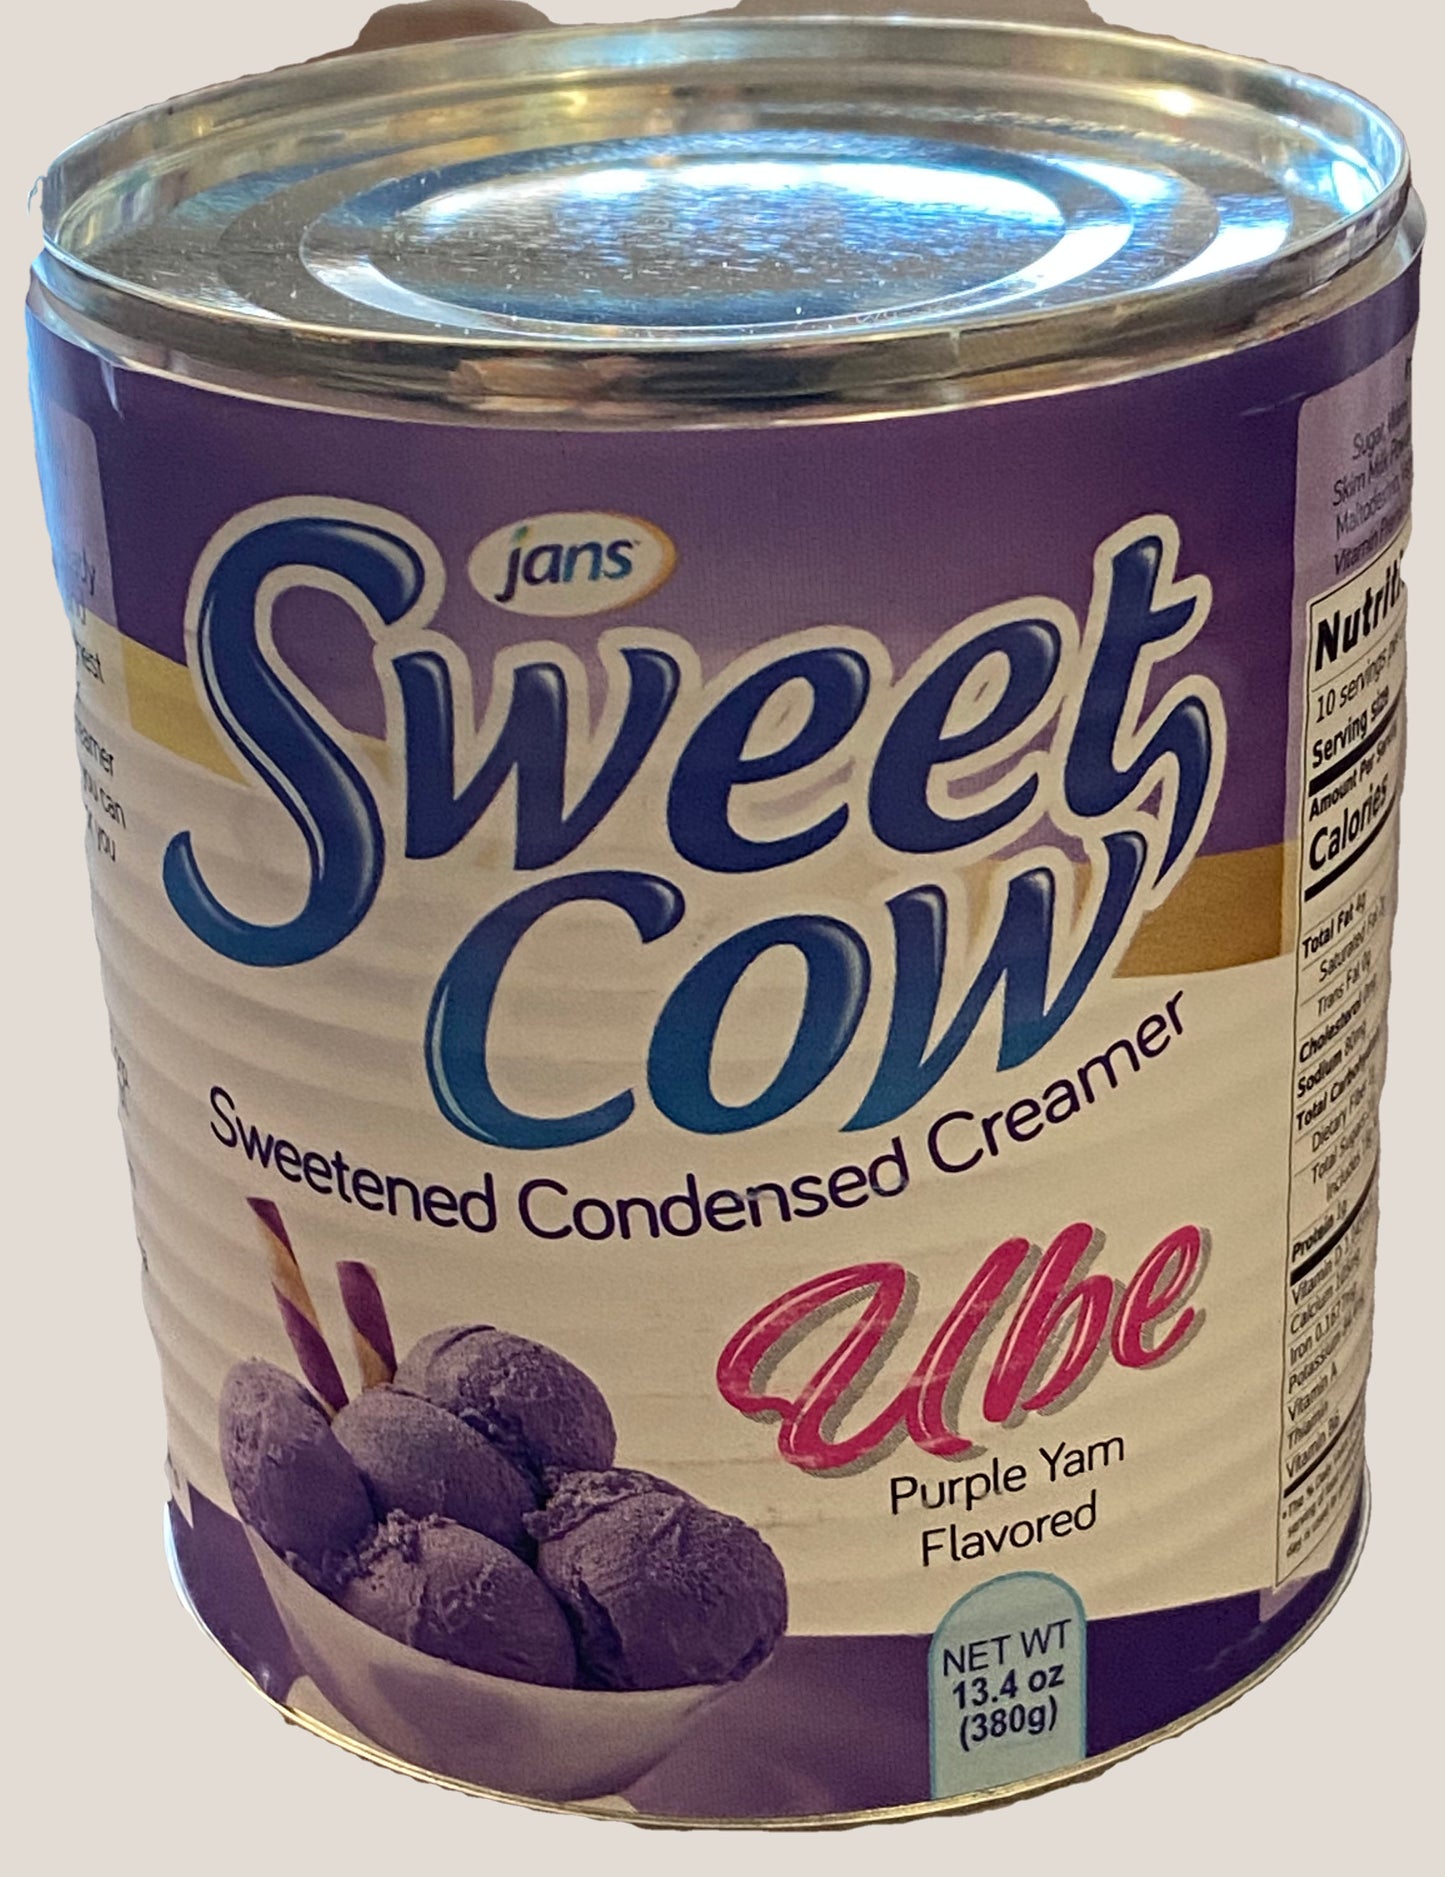 Jans Sweet Cow Sweetened Condensed Creamer Ube (Purple Yam) Flavor - 13.4 oz